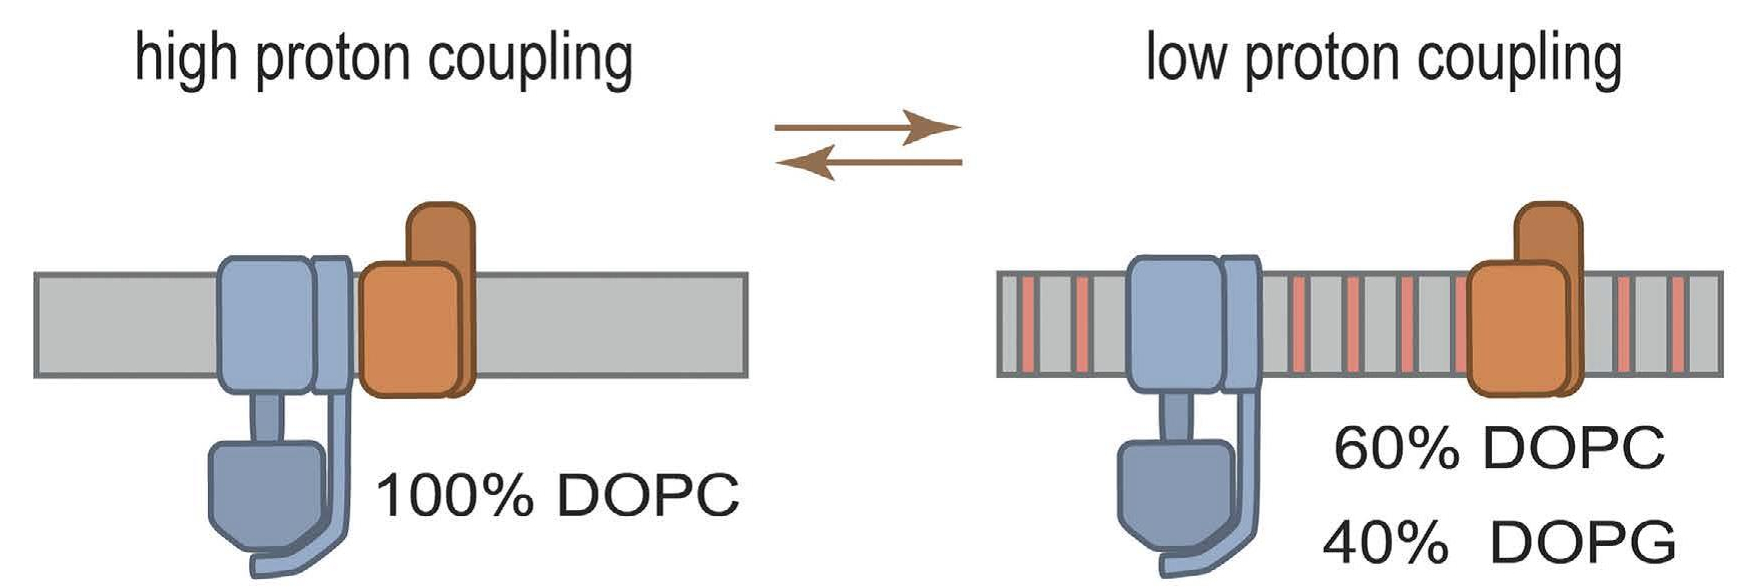 Proton coupling scheme